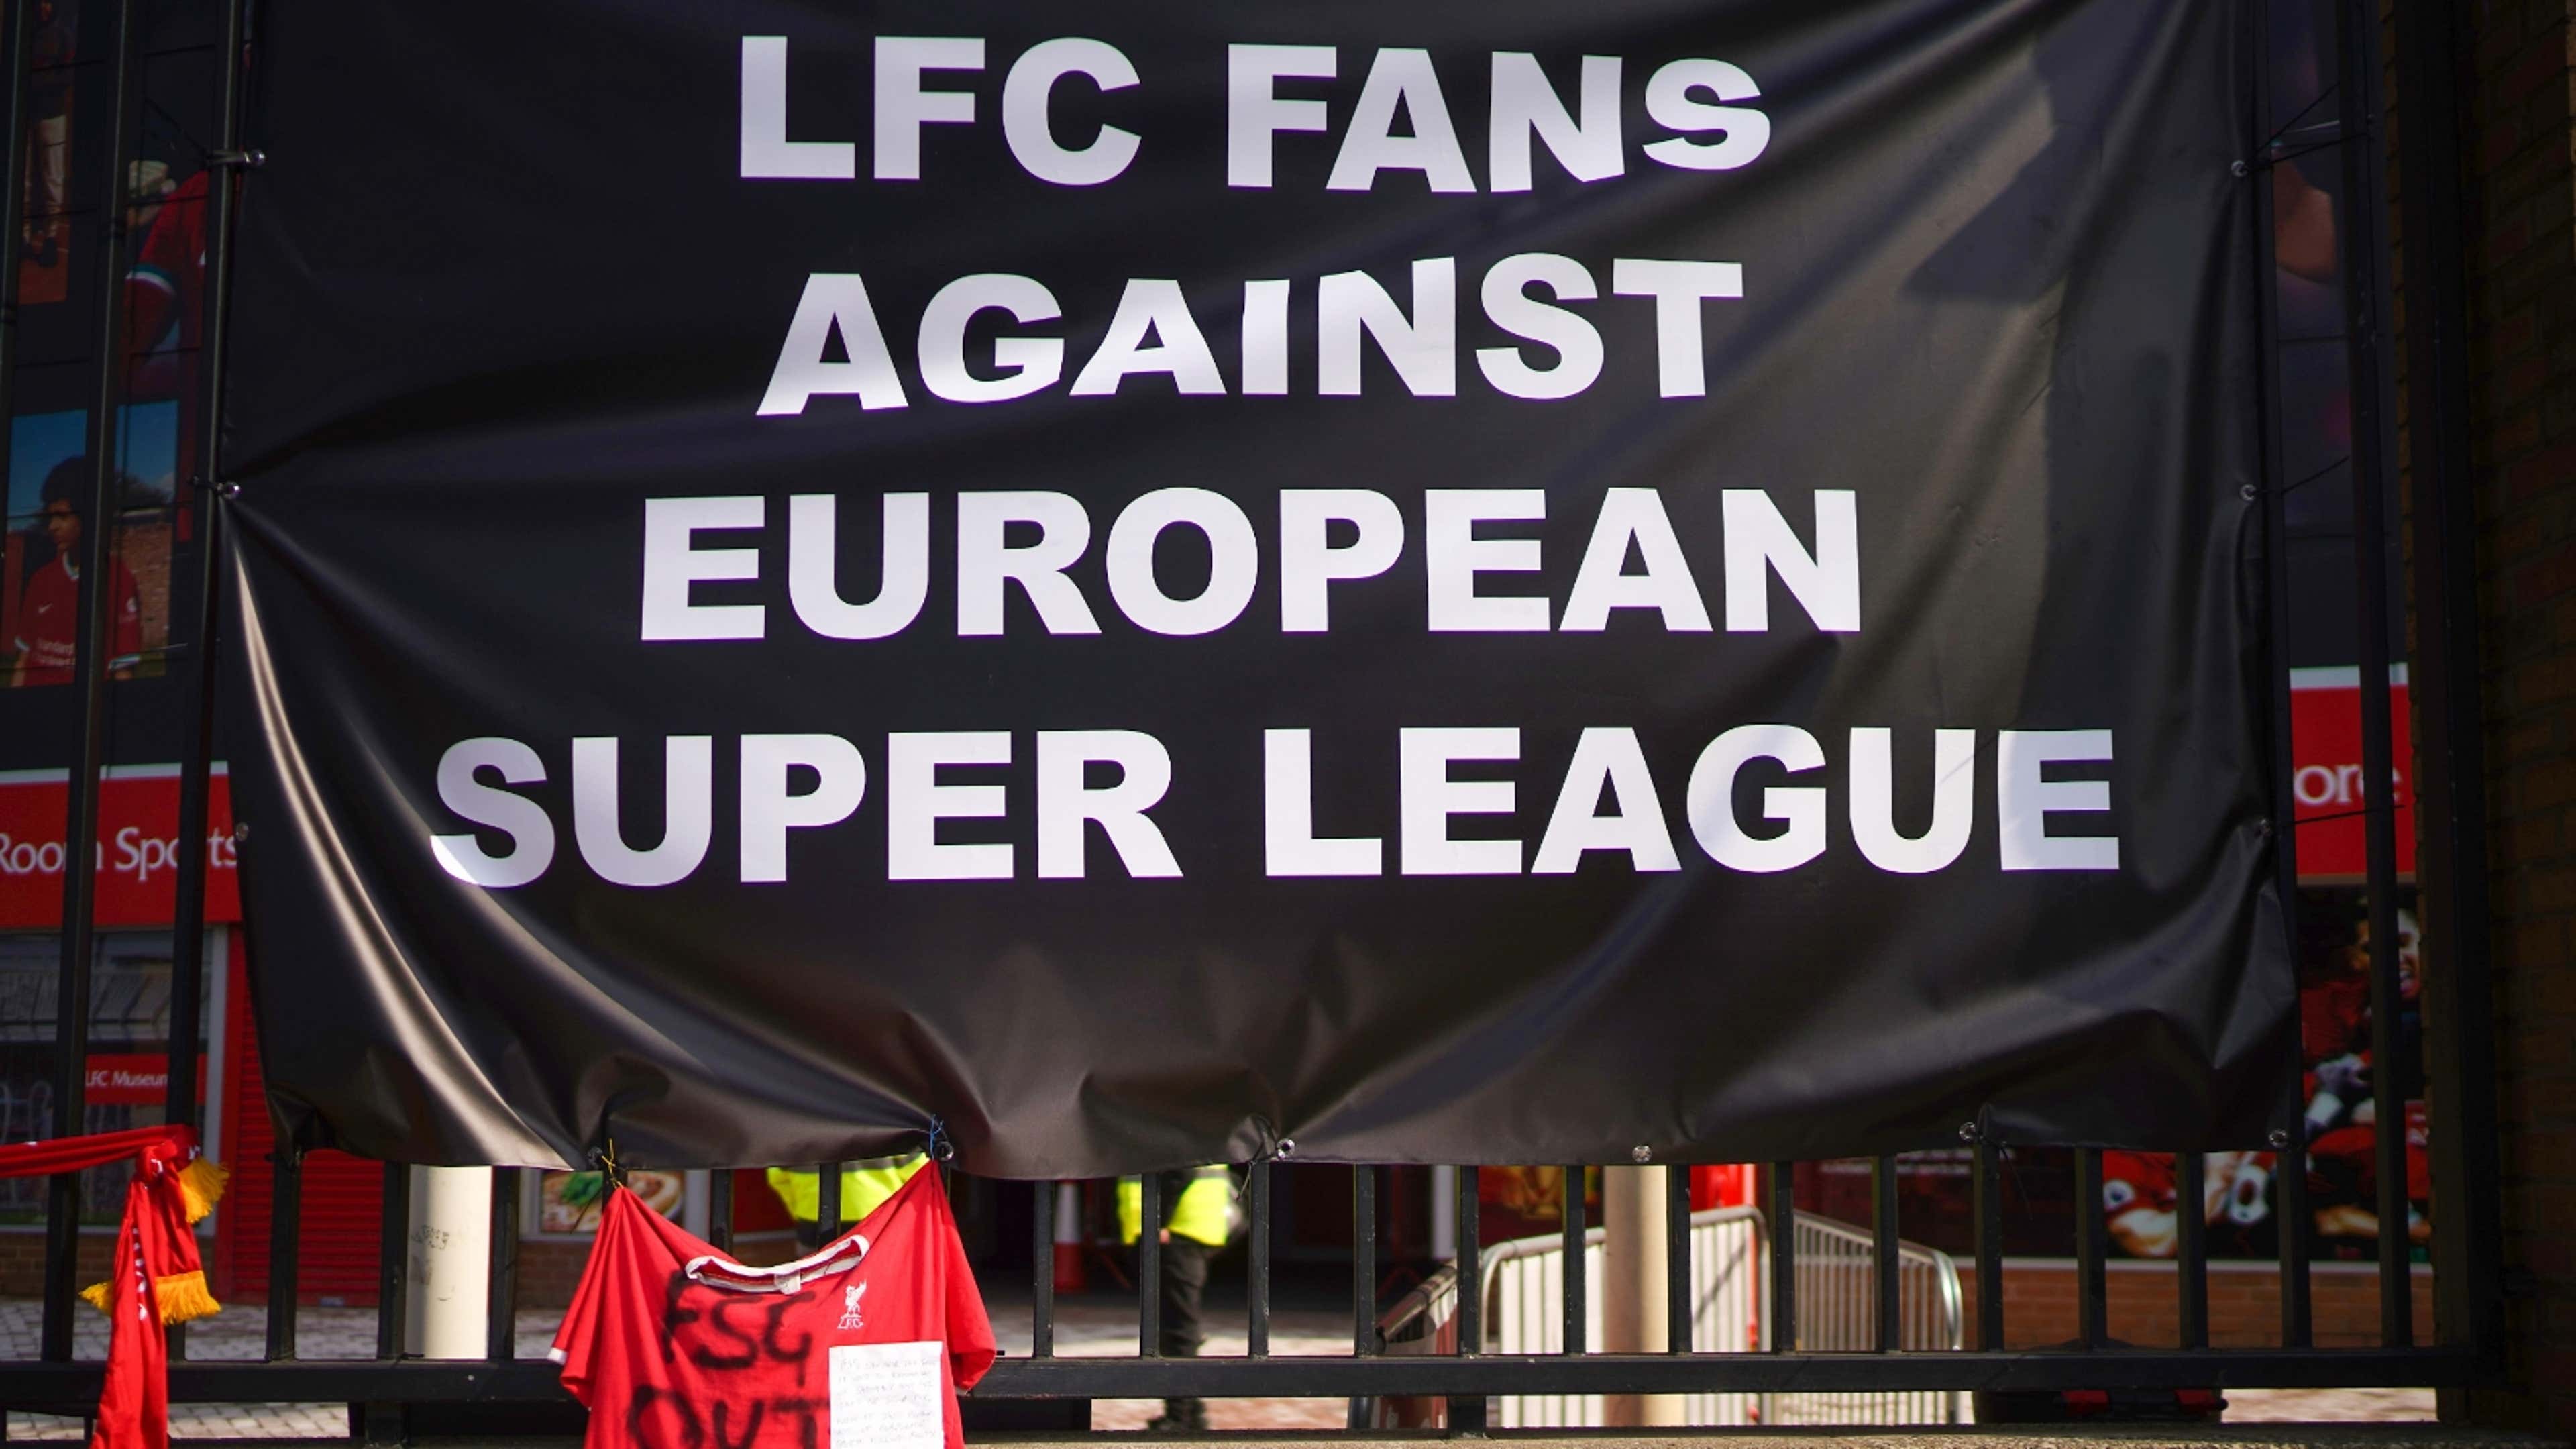 Liverpool Anfield Super League protest